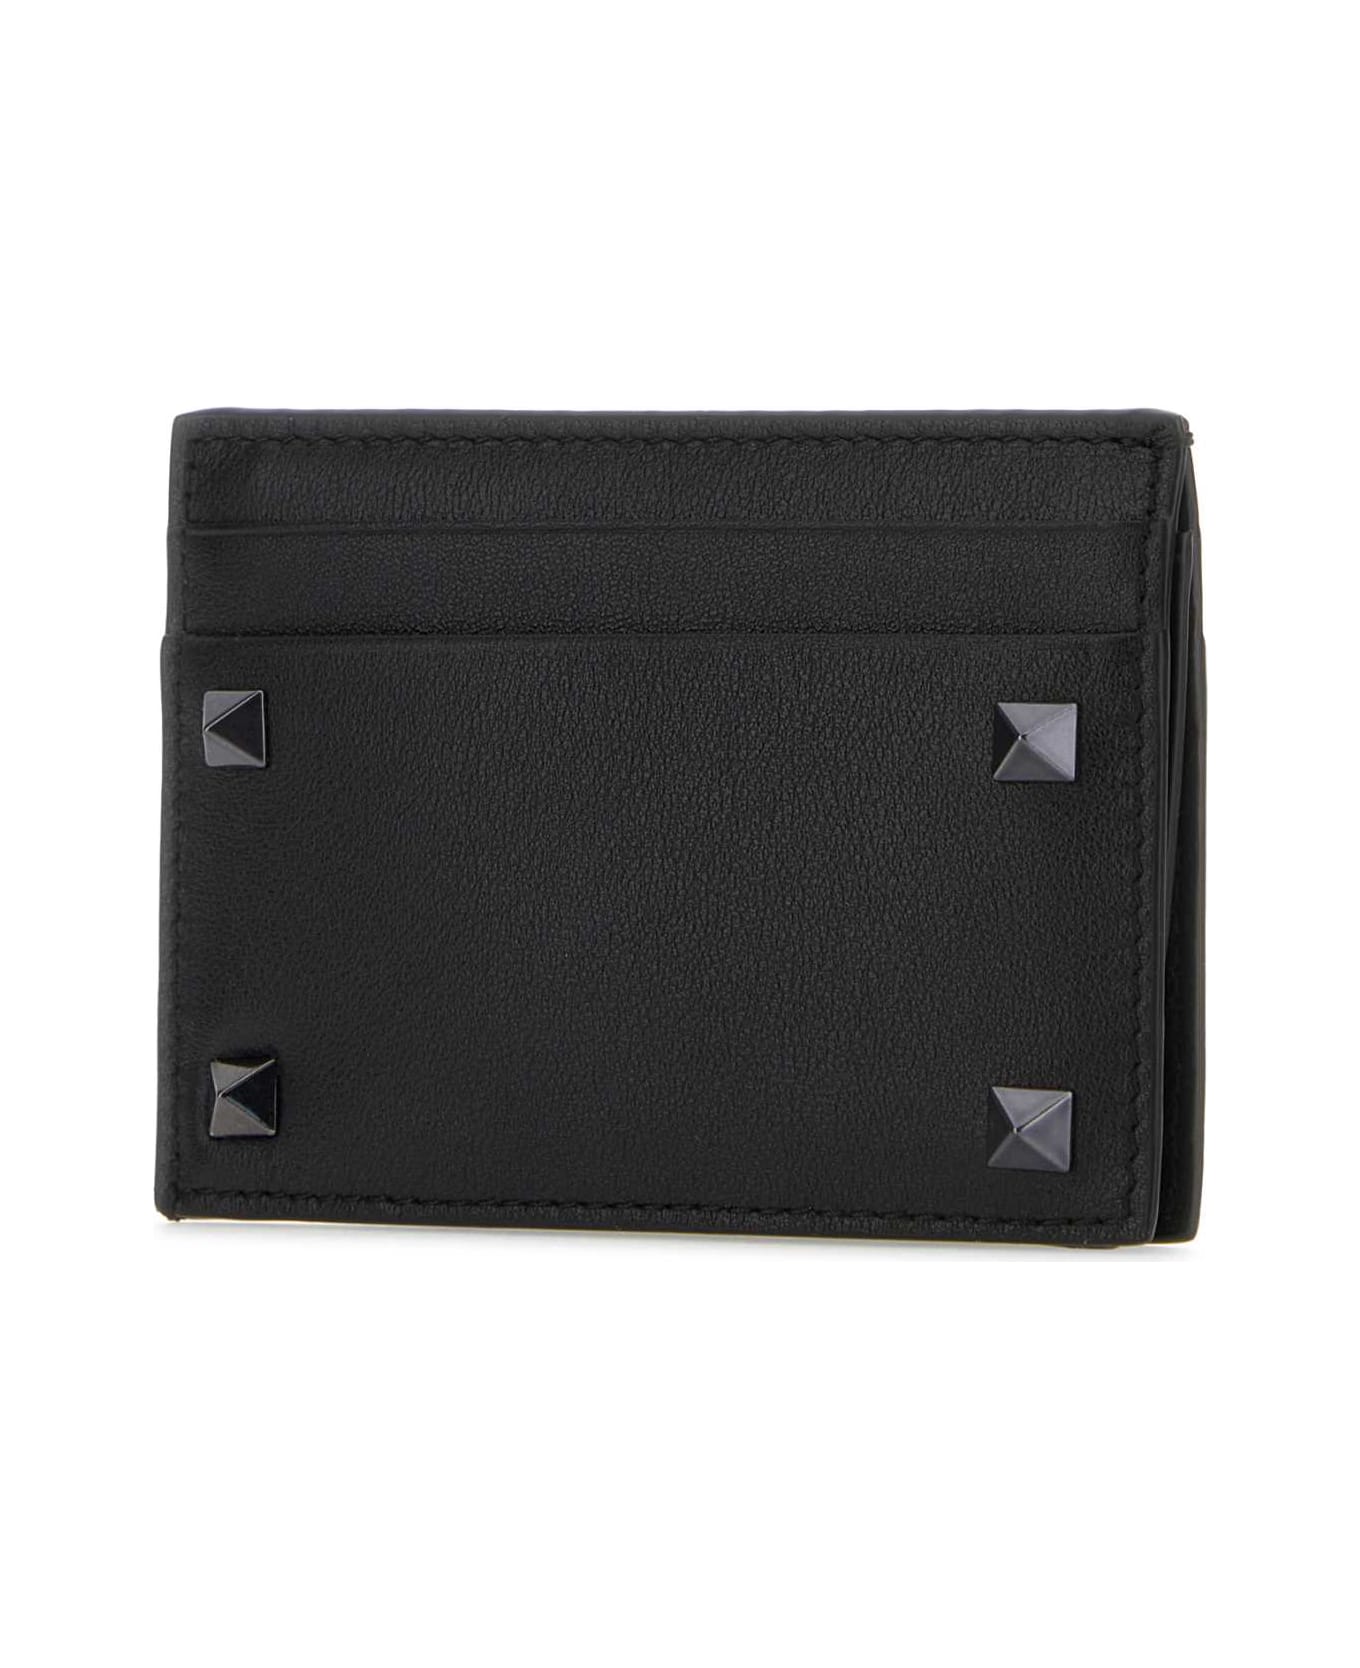 Valentino Garavani Black Leather Rockstud Card Holder - NERO 財布